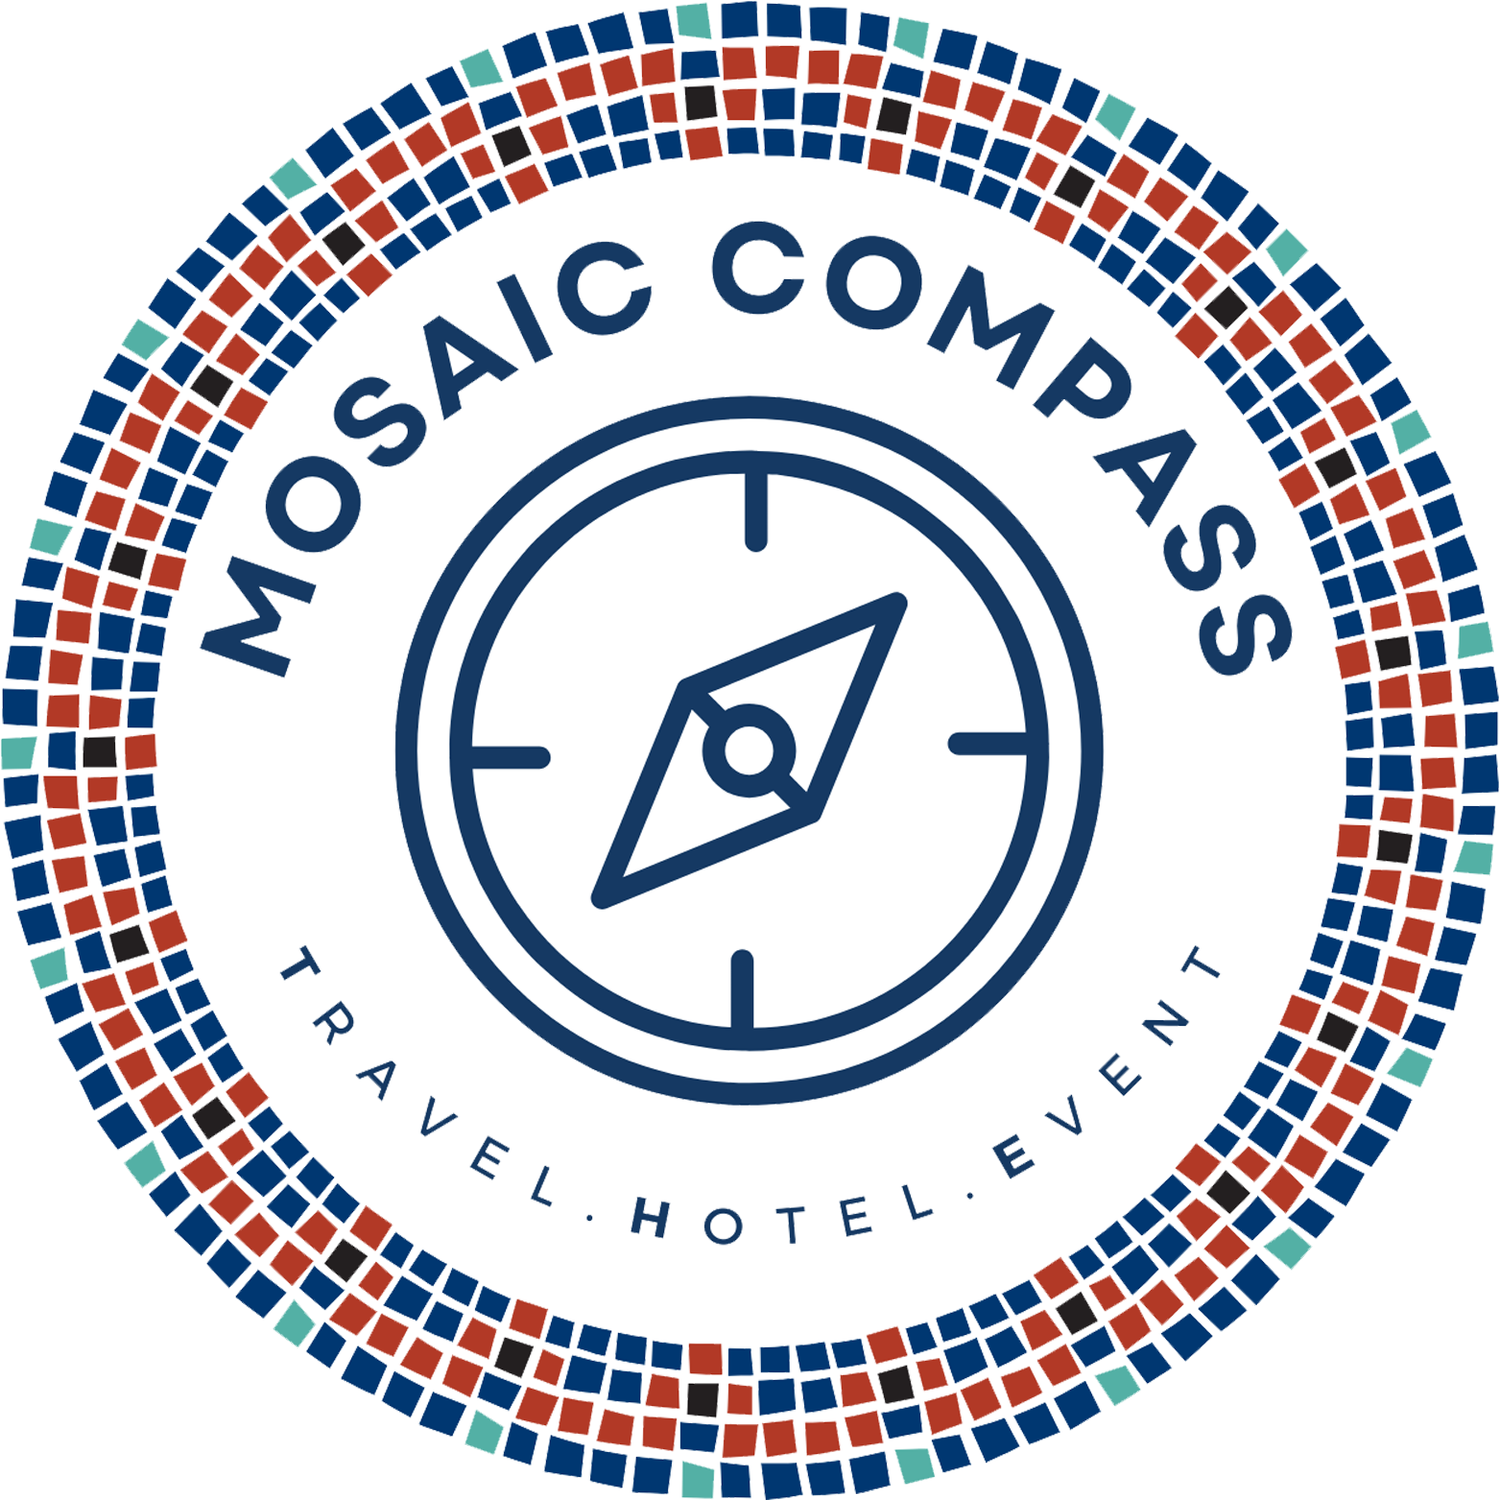 Mosaic Compass